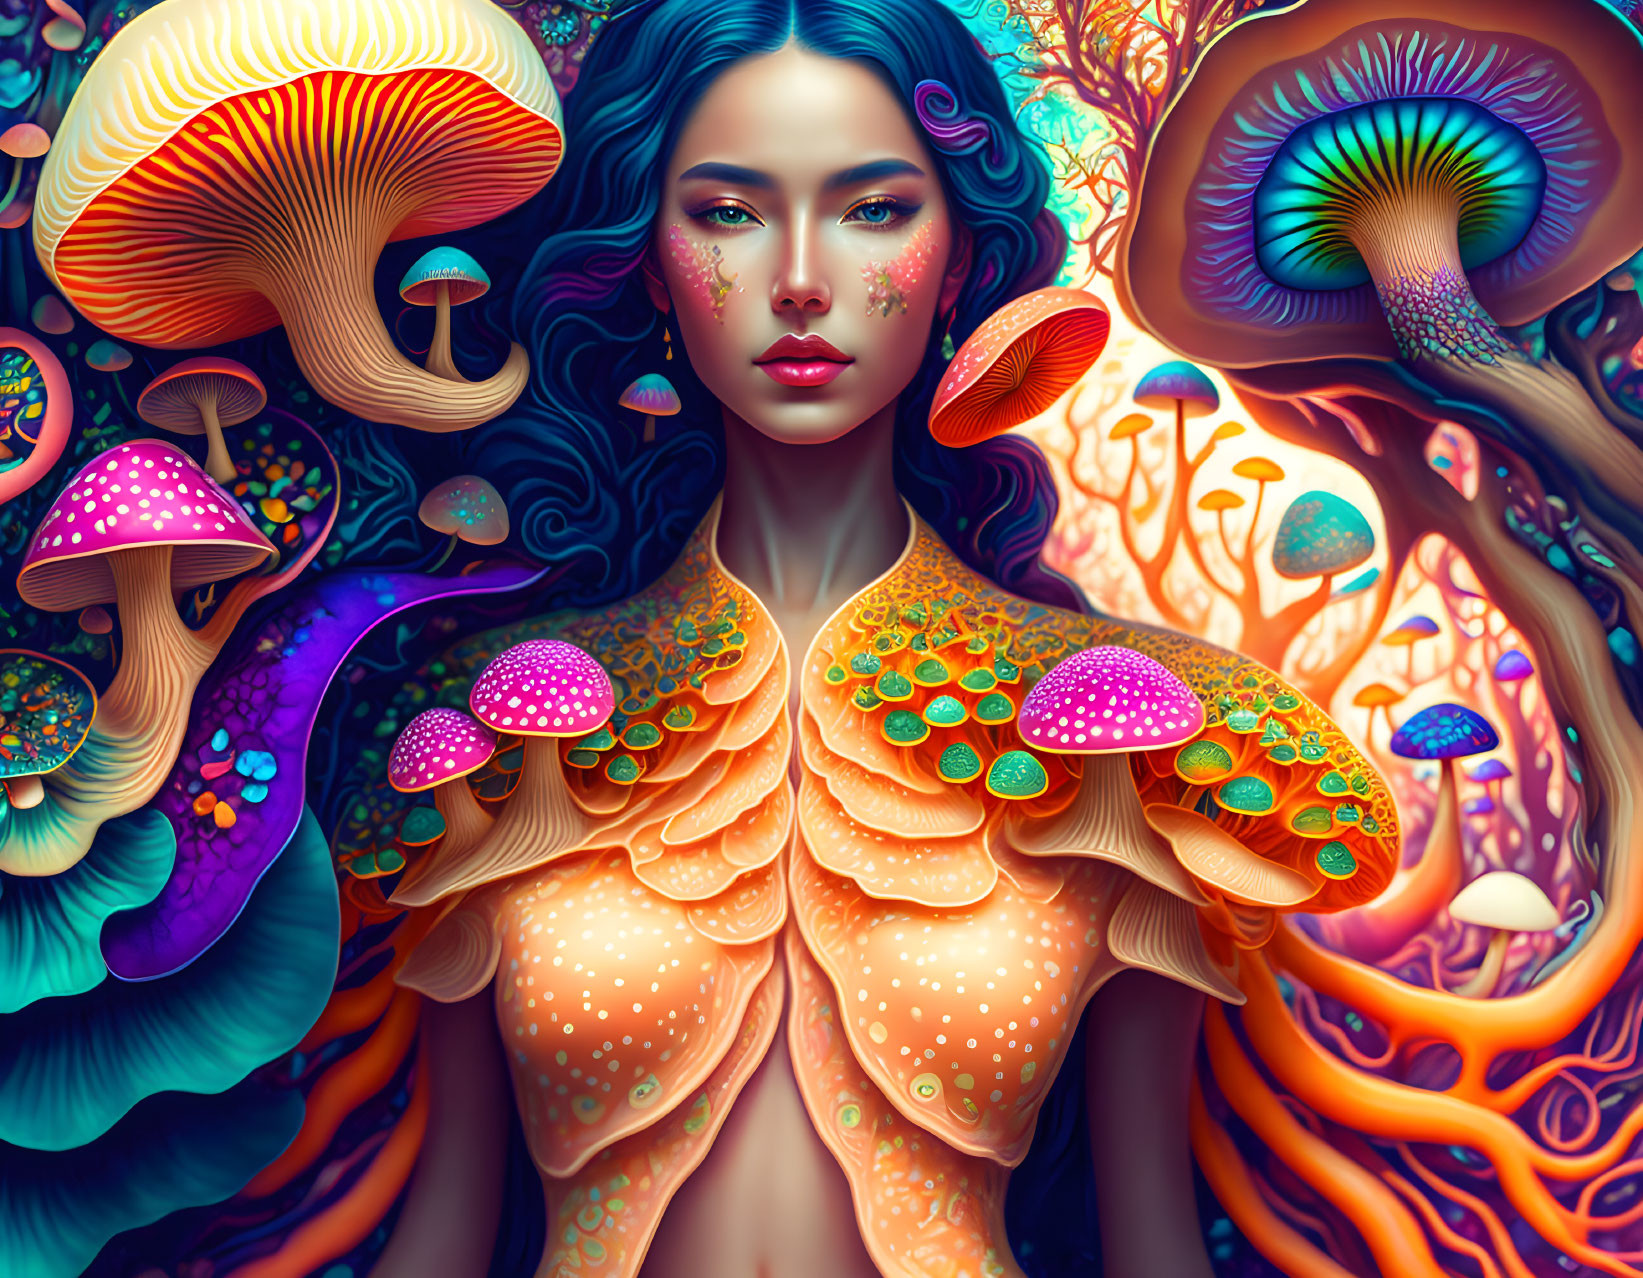 Colorful digital artwork: Woman in mushroom attire among vibrant fungi